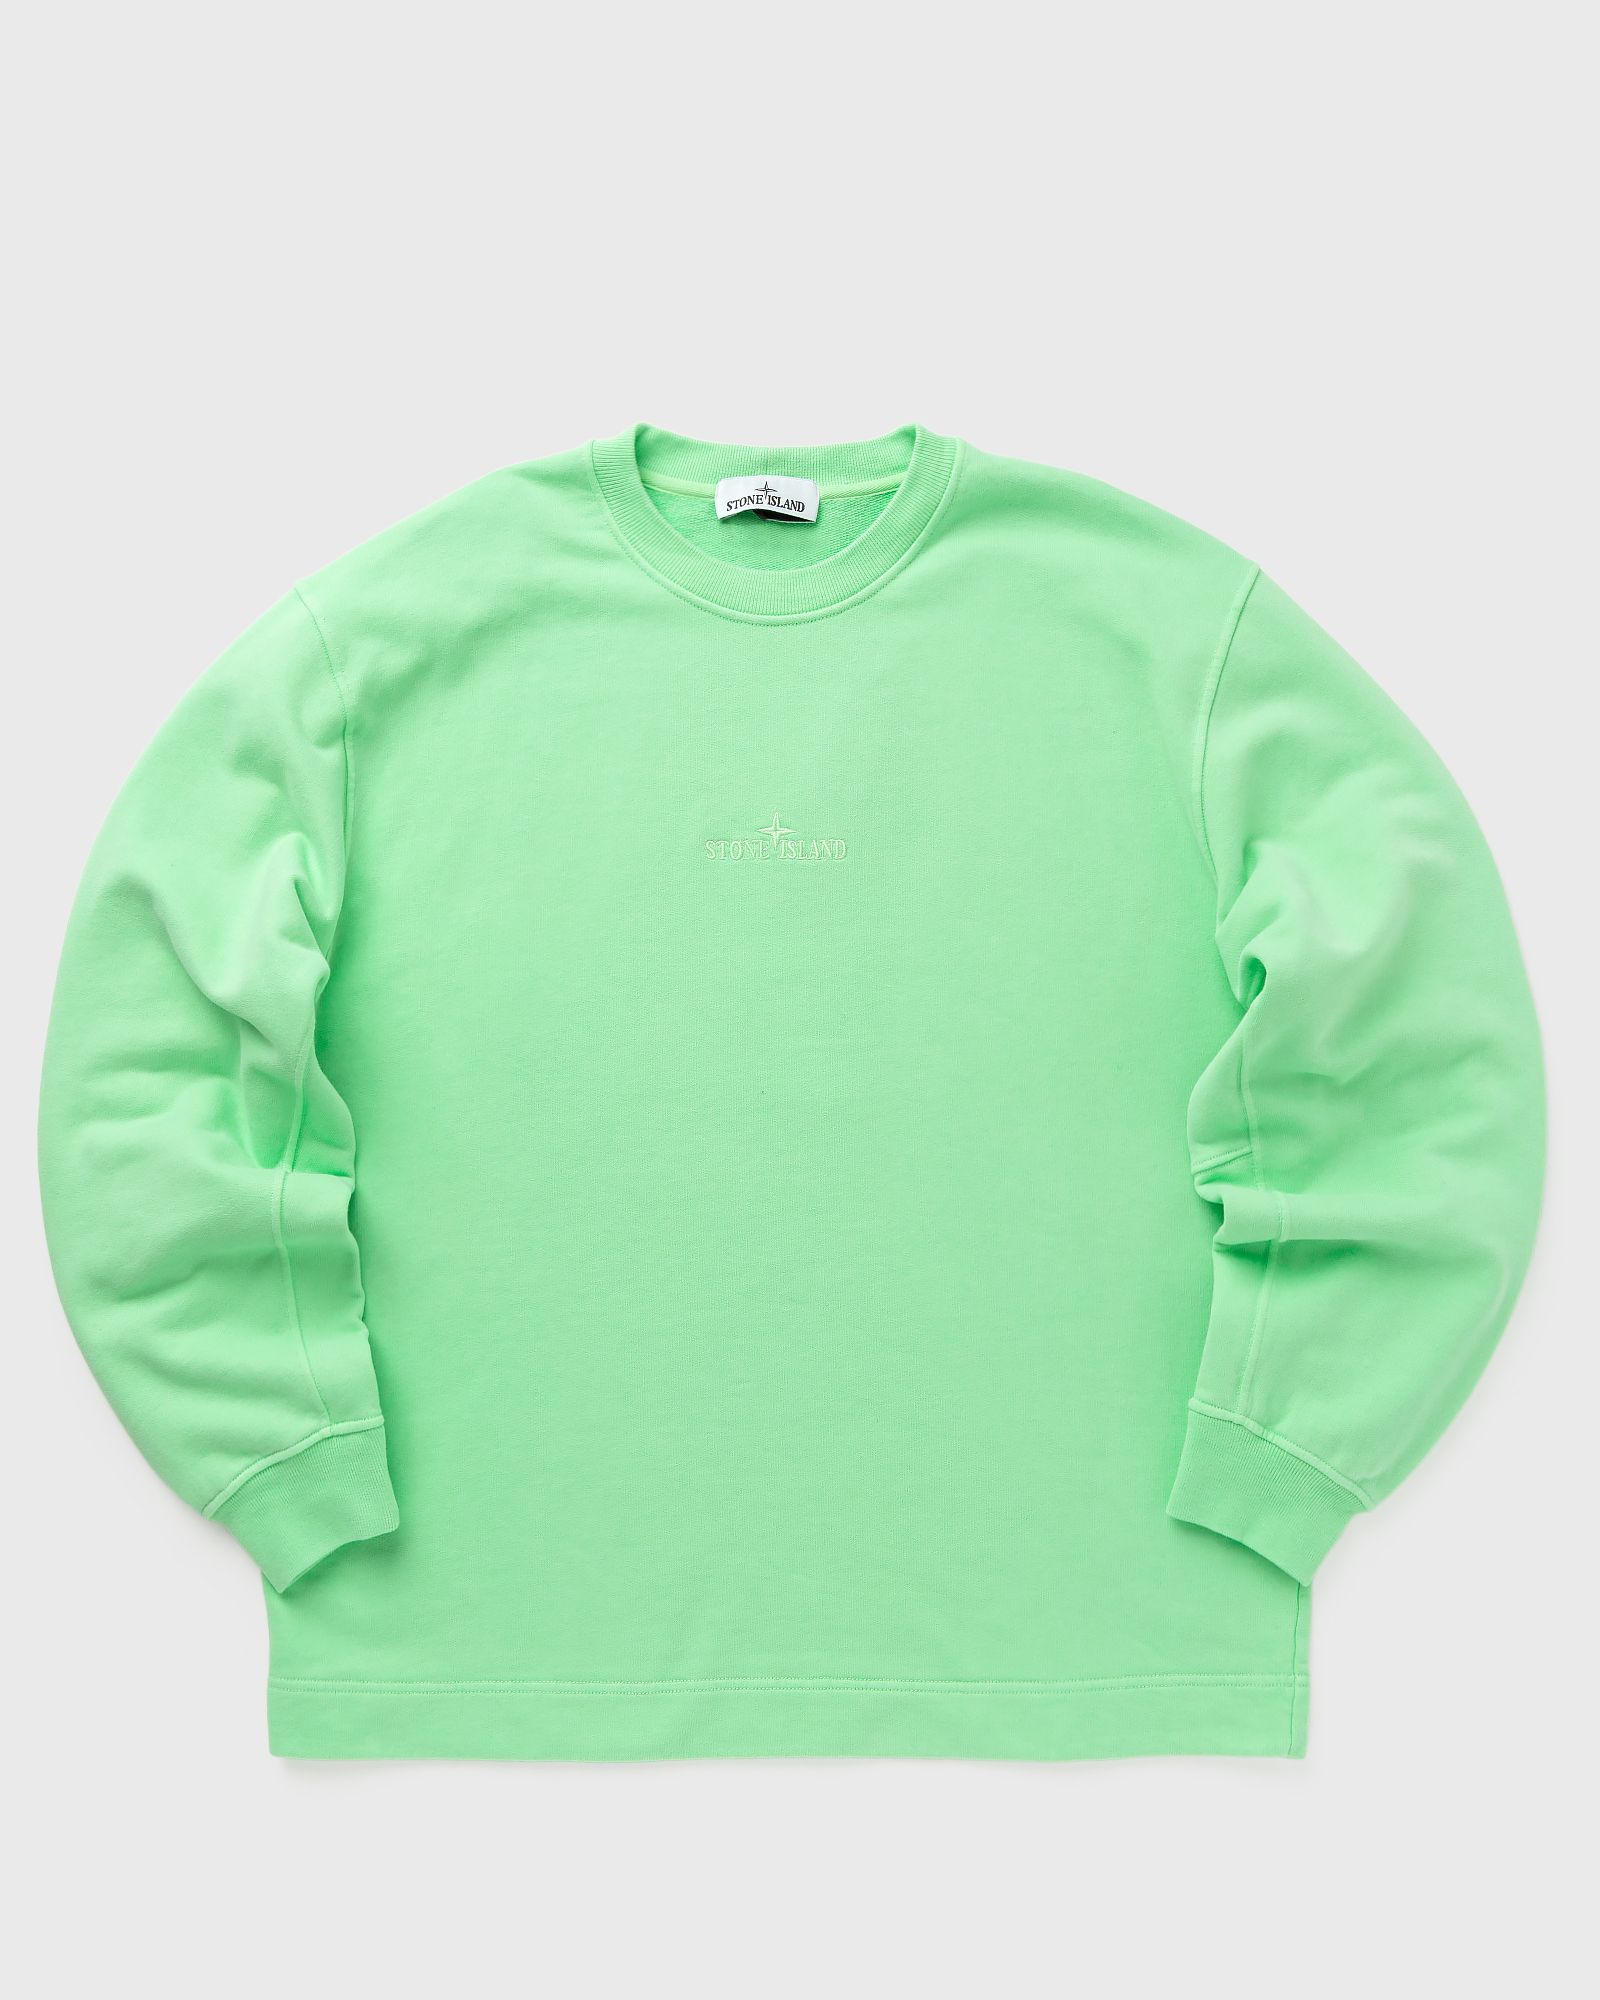 Stone Island - sweat-shirt brushed cotton fleece, garment dyed men sweatshirts green in größe:m